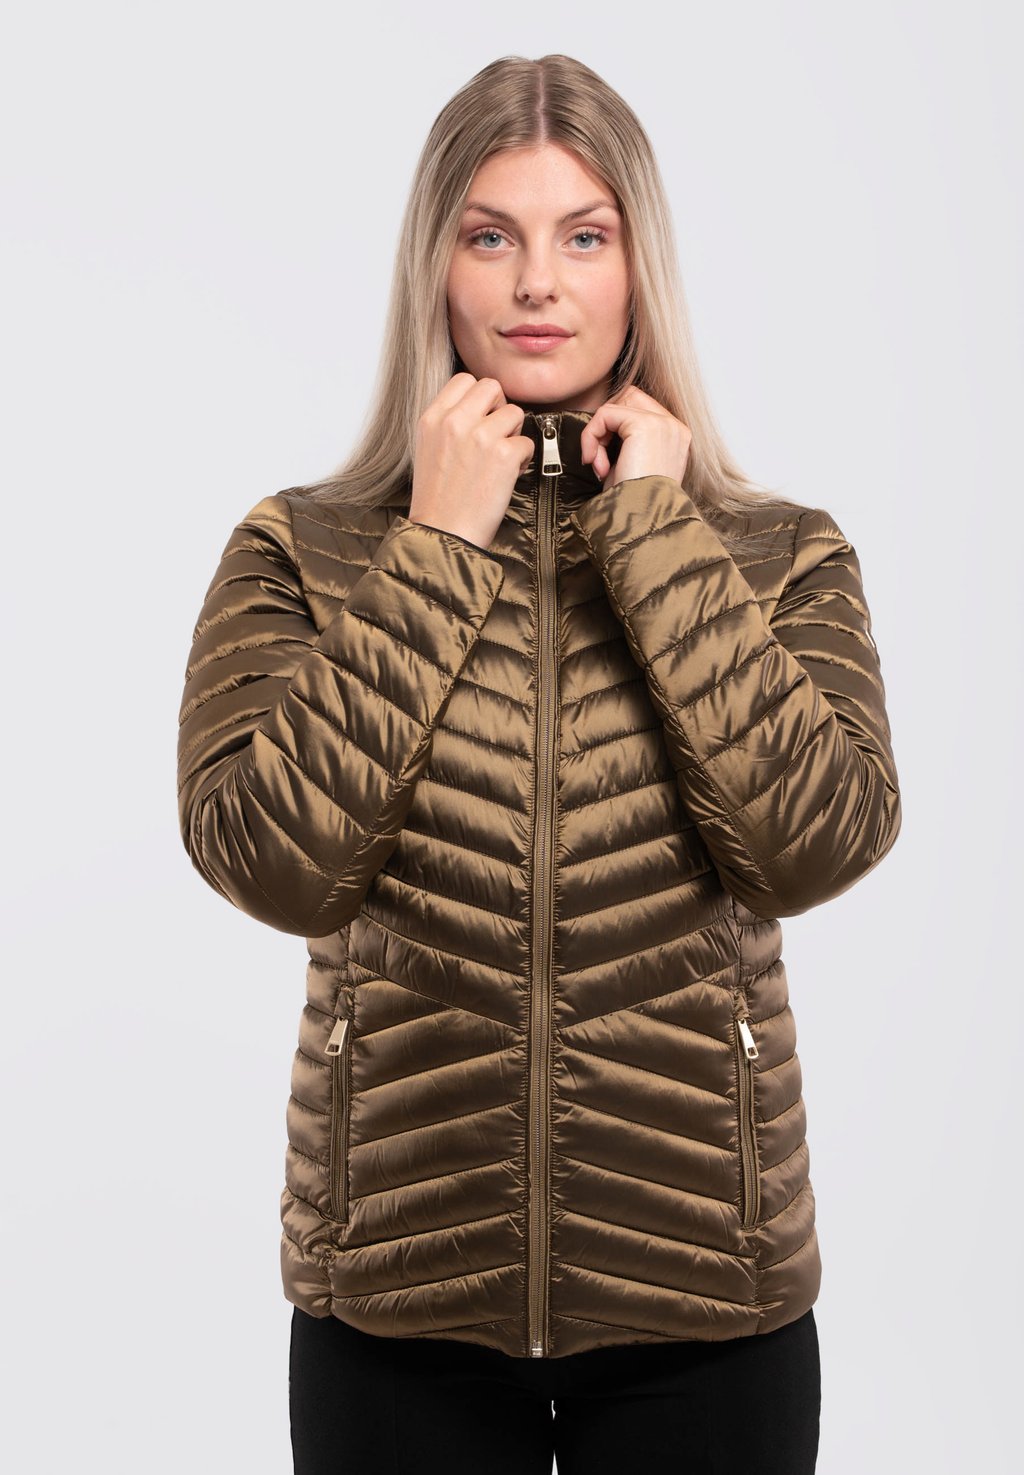 Зимняя куртка HIETOINEN Luhta, коричневый зимняя куртка luhta